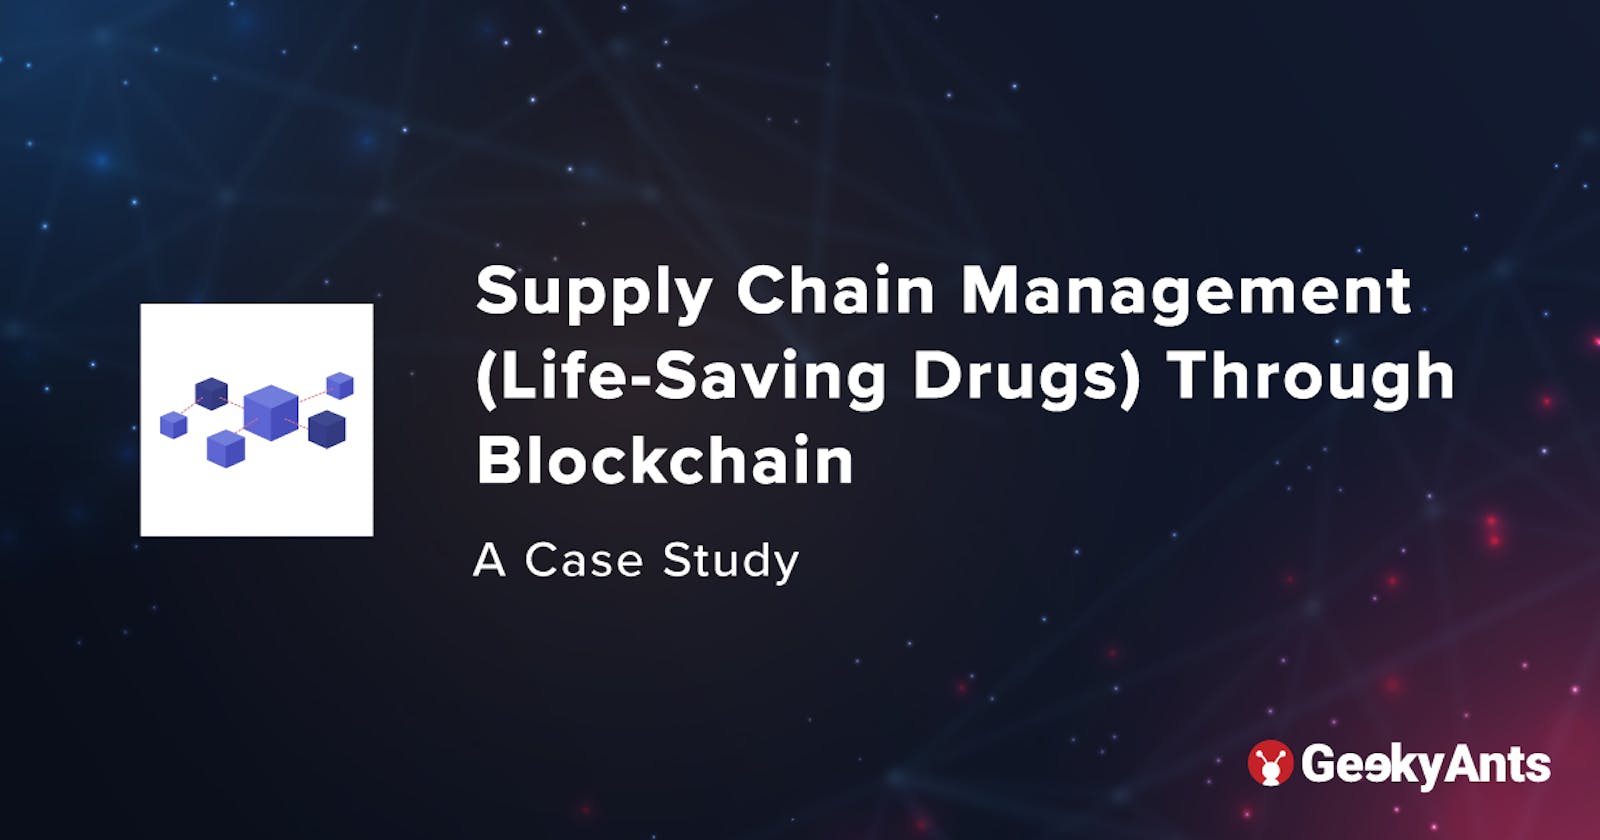 Supply Chain Management (Life-Saving Drugs) Through Blockchain: A Case Study